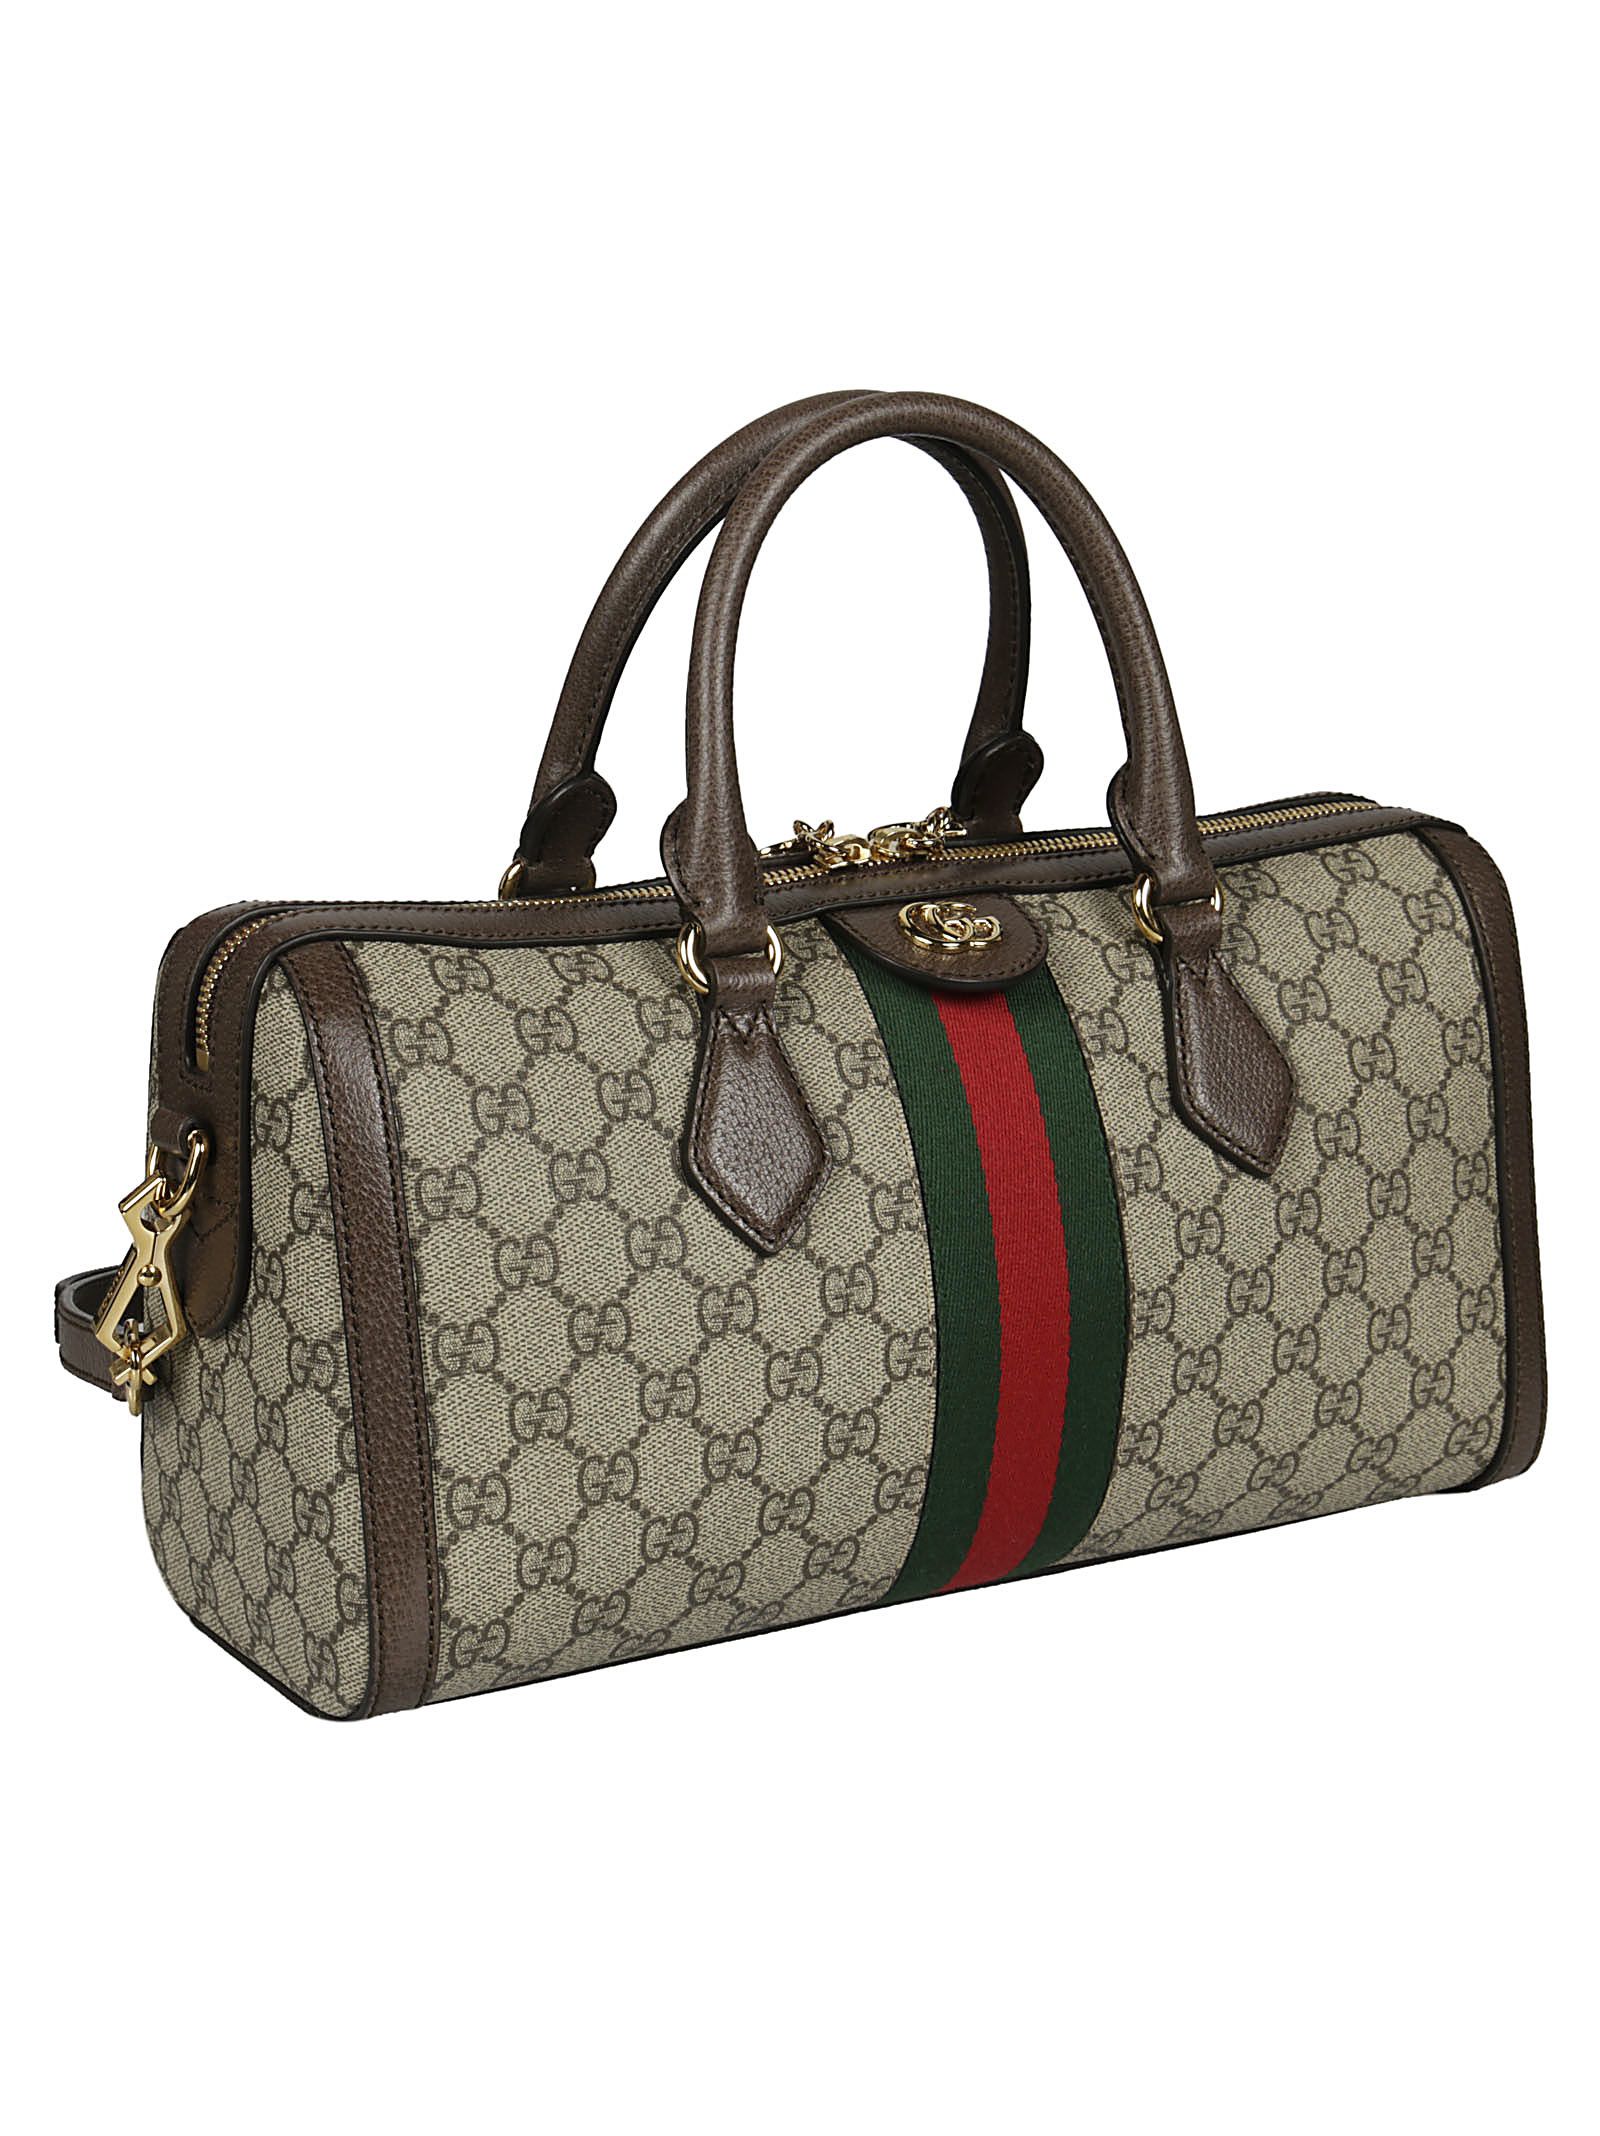 italist | Best price in the market for Gucci Gucci Ophidia Gg Tote - Multicolor - 10737650 | italist